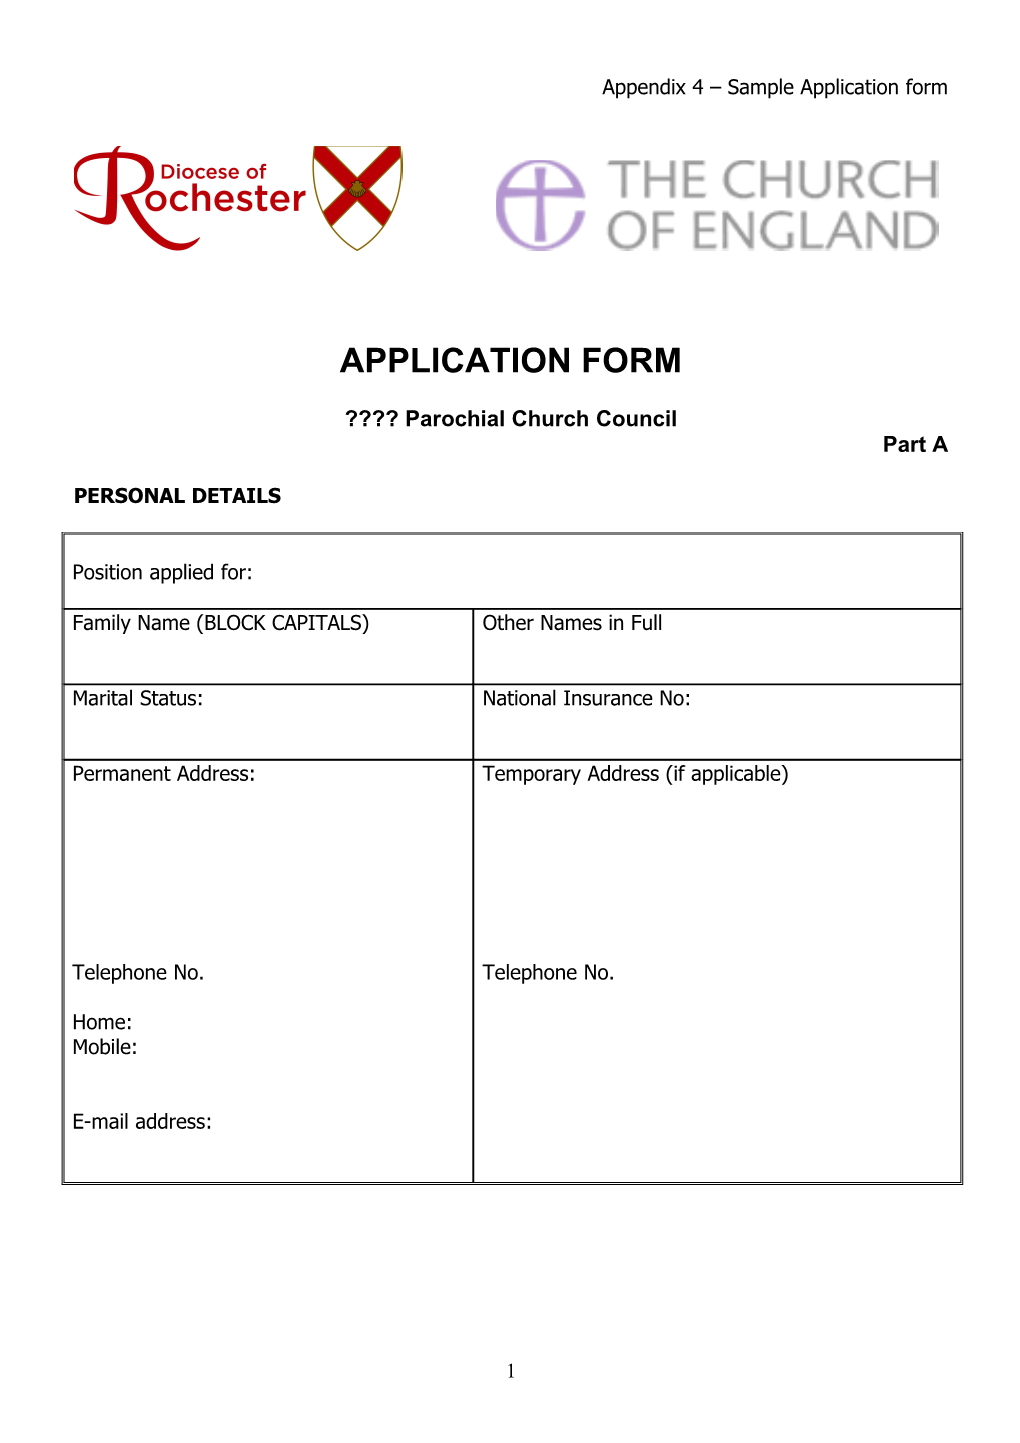 Appendix 4 Sample Application Form